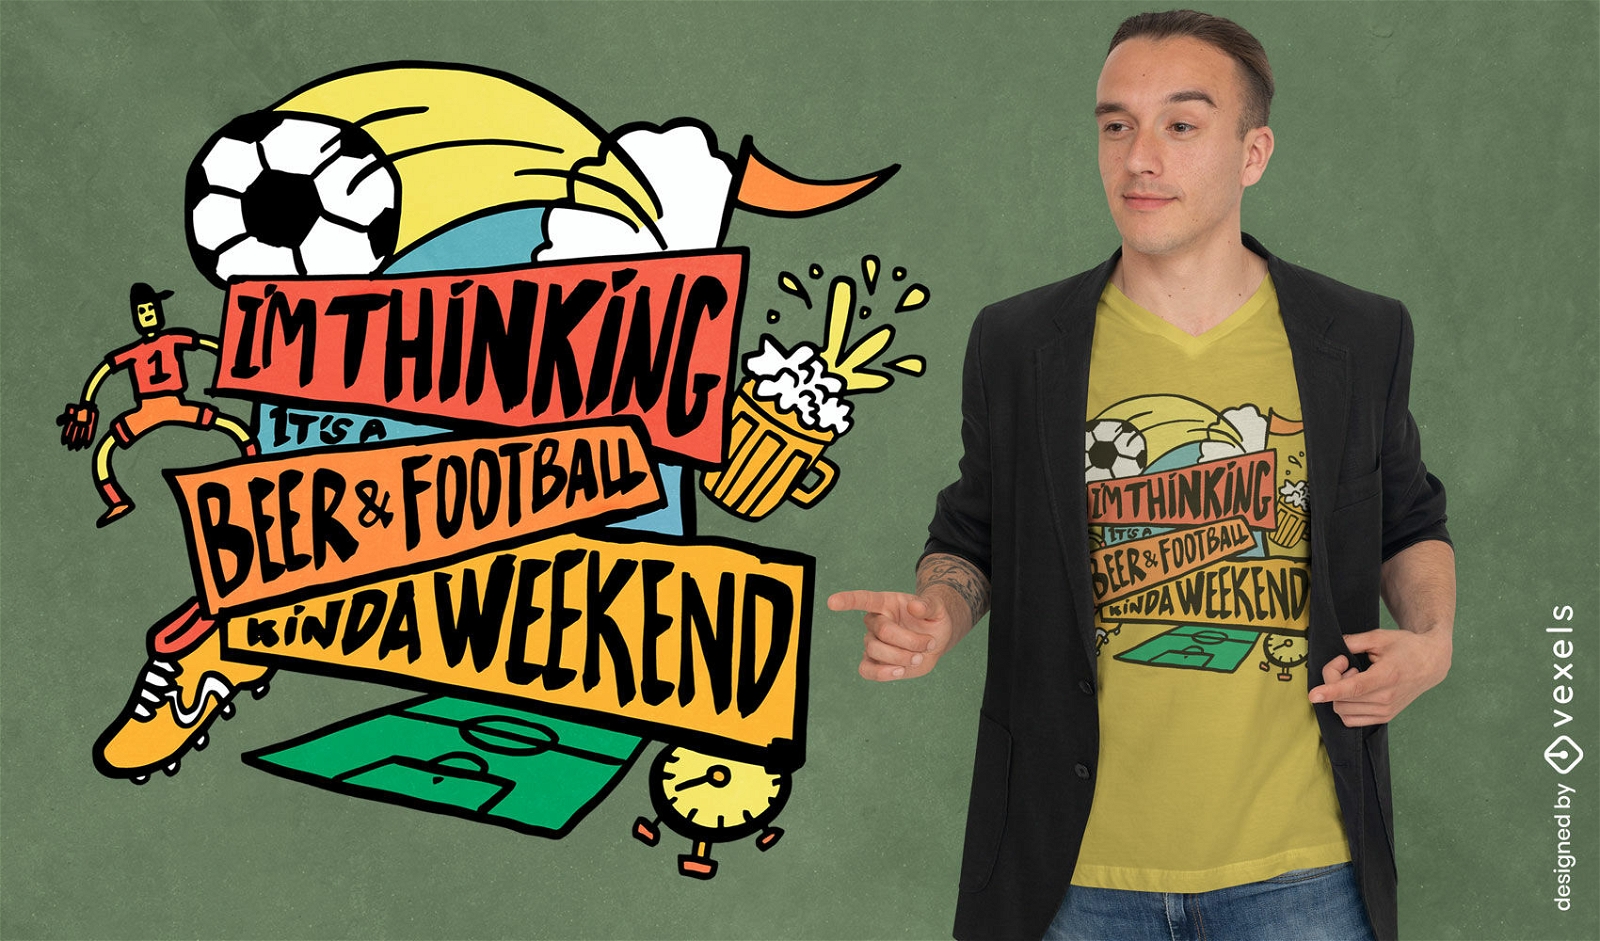 Soccer sport and beer t-shirt design